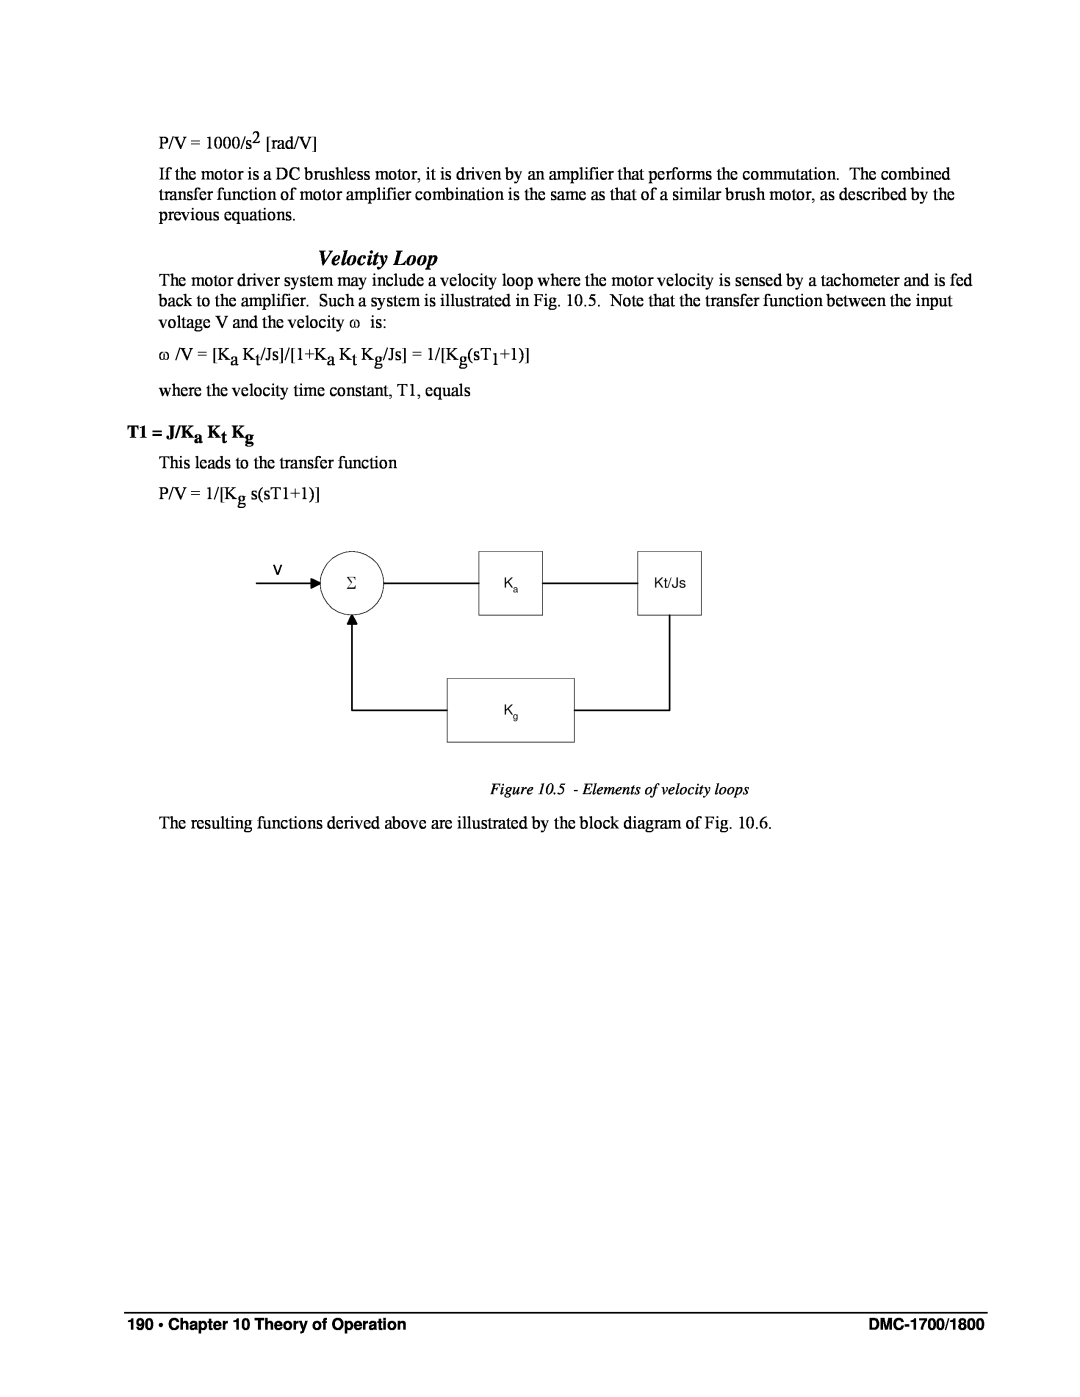 Galil DMC-1800, DMC-1700 user manual Velocity Loop, T1 = J/Ka Kt Kg 